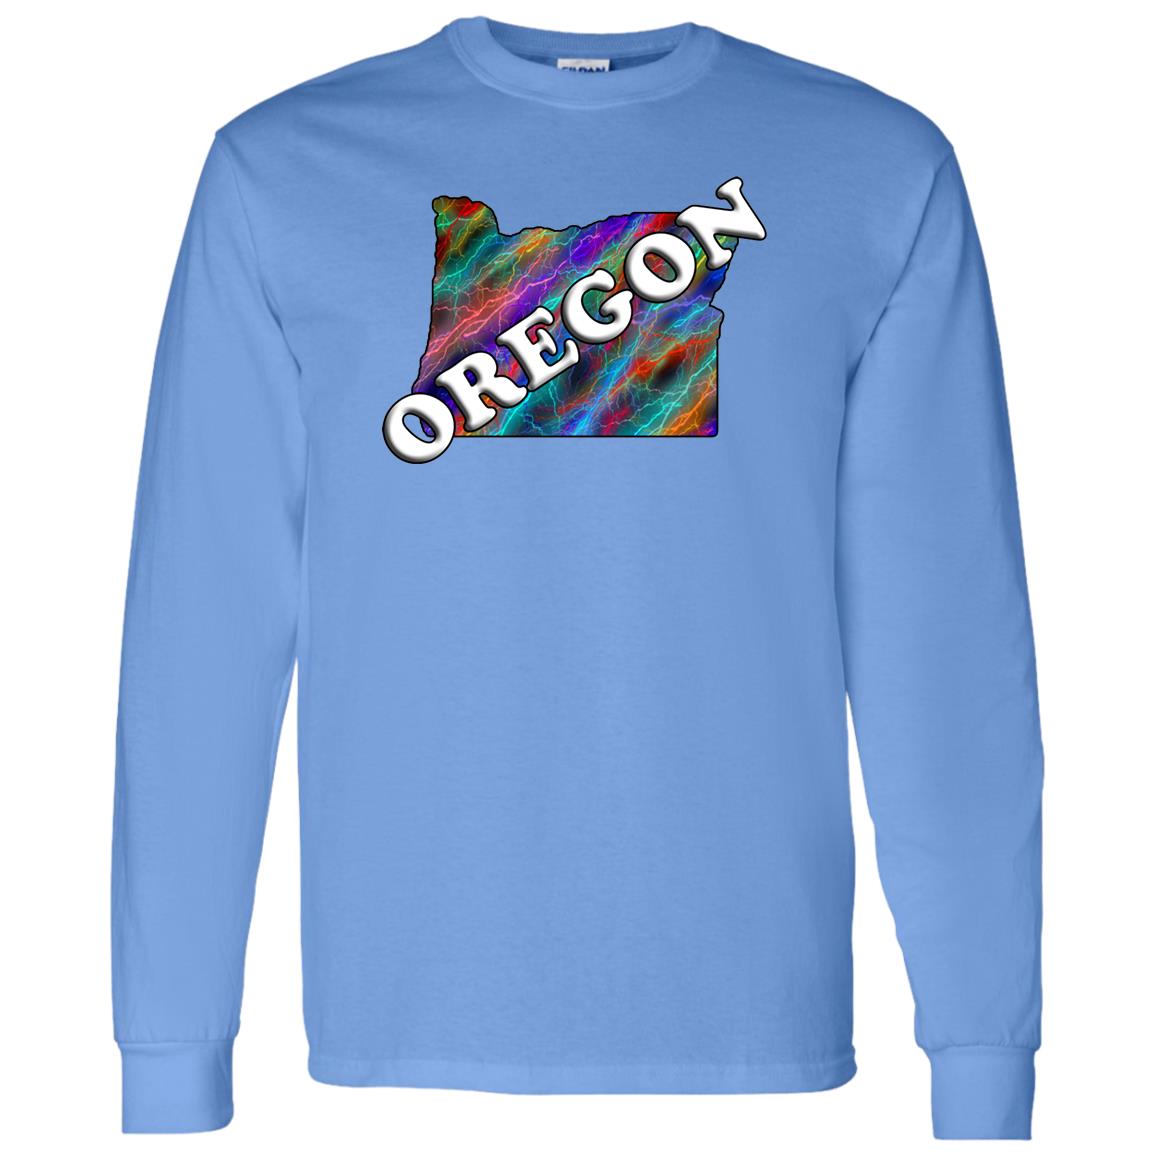 Oregon Long Sleeve State T-Shirt